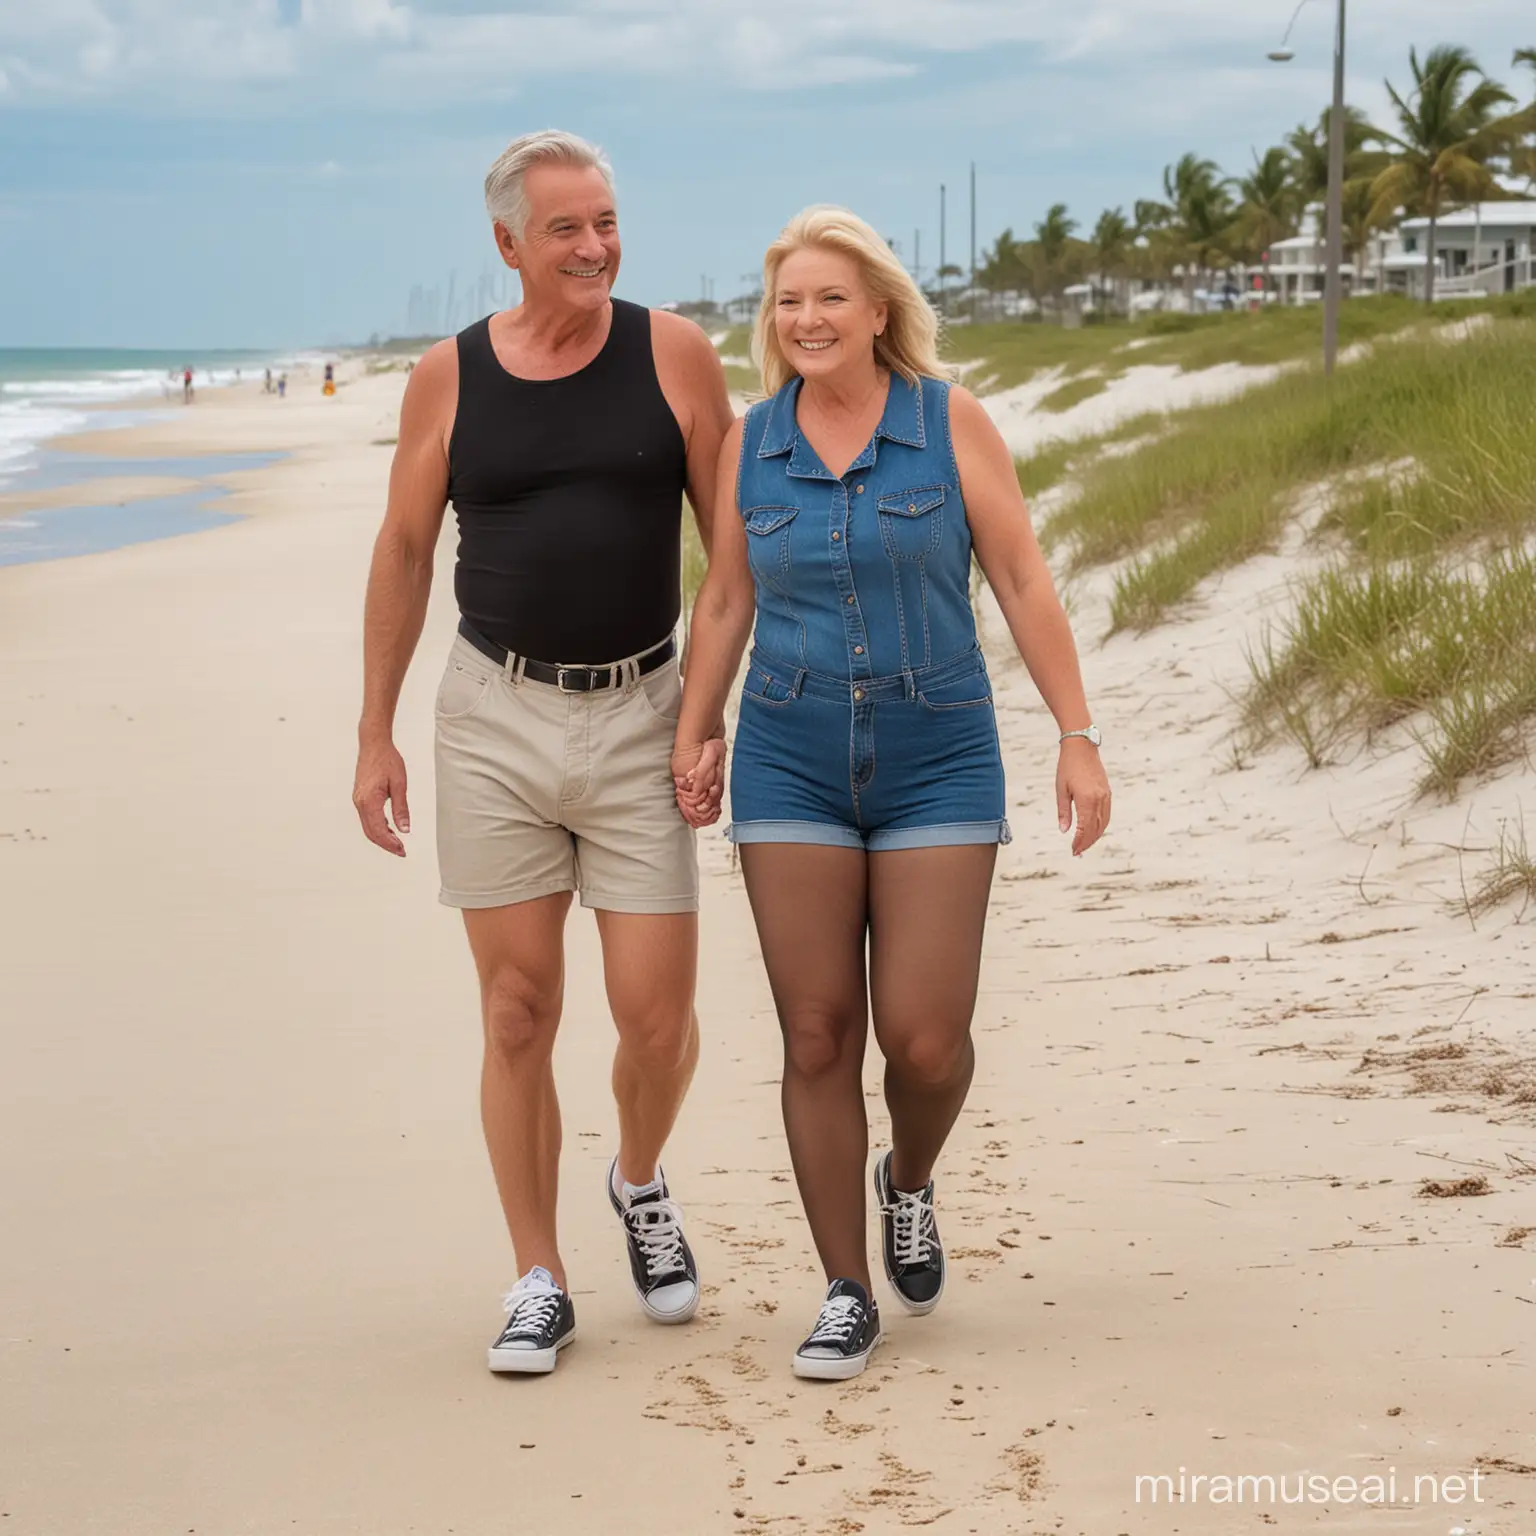 Mature Couple Enjoying Beach Stroll in Florida Sunshine